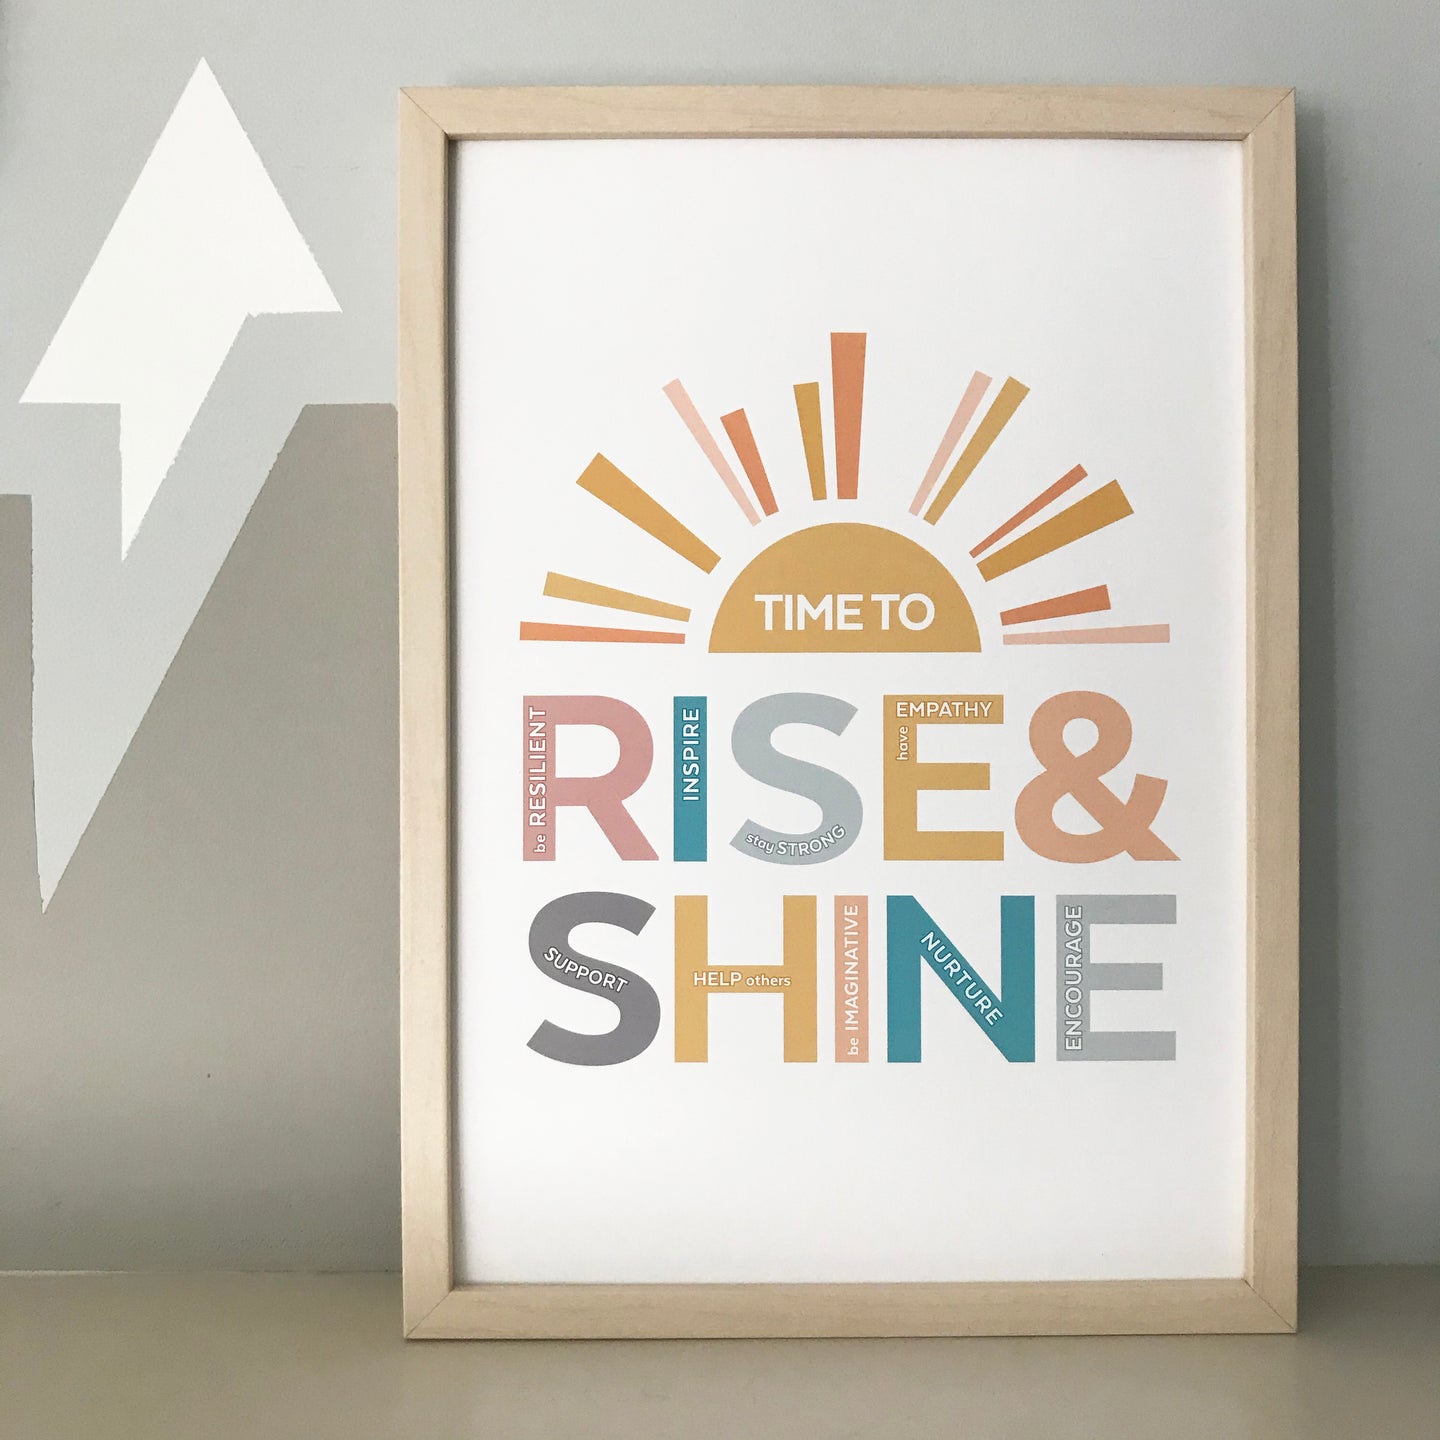 Rise & Shine print